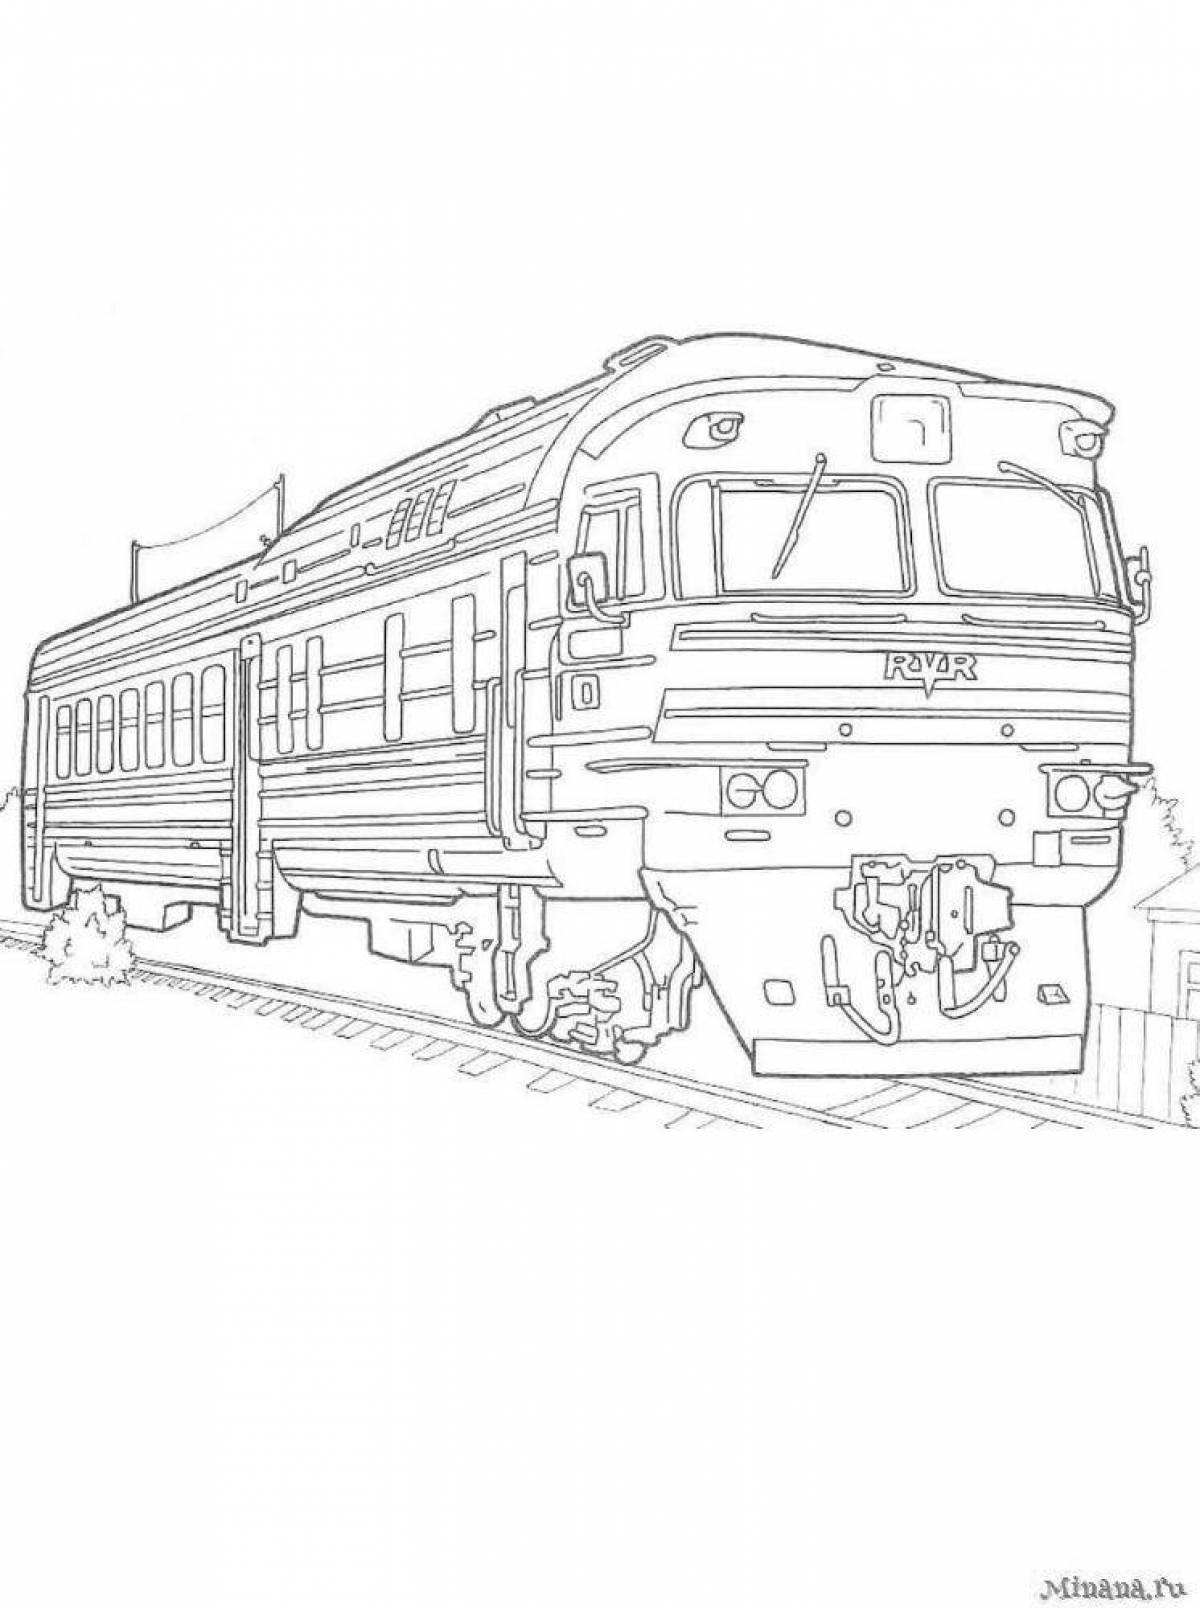 Впечатляющая страница раскраски локомотива